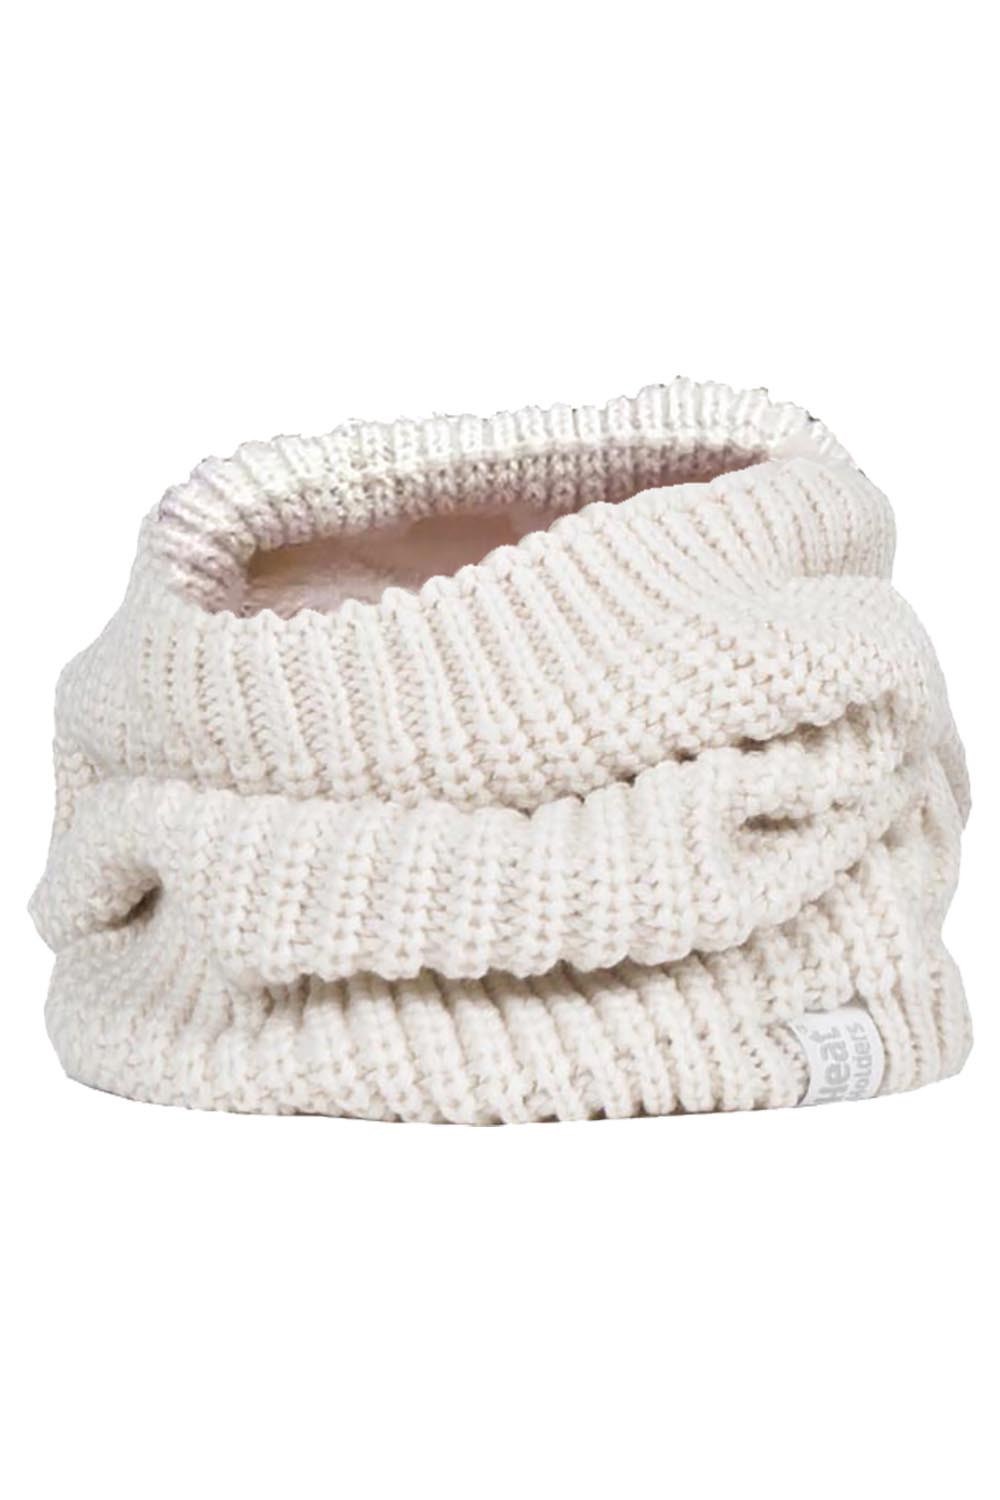 Womens Winter Fleece Lined Thermal Neck Warmer -